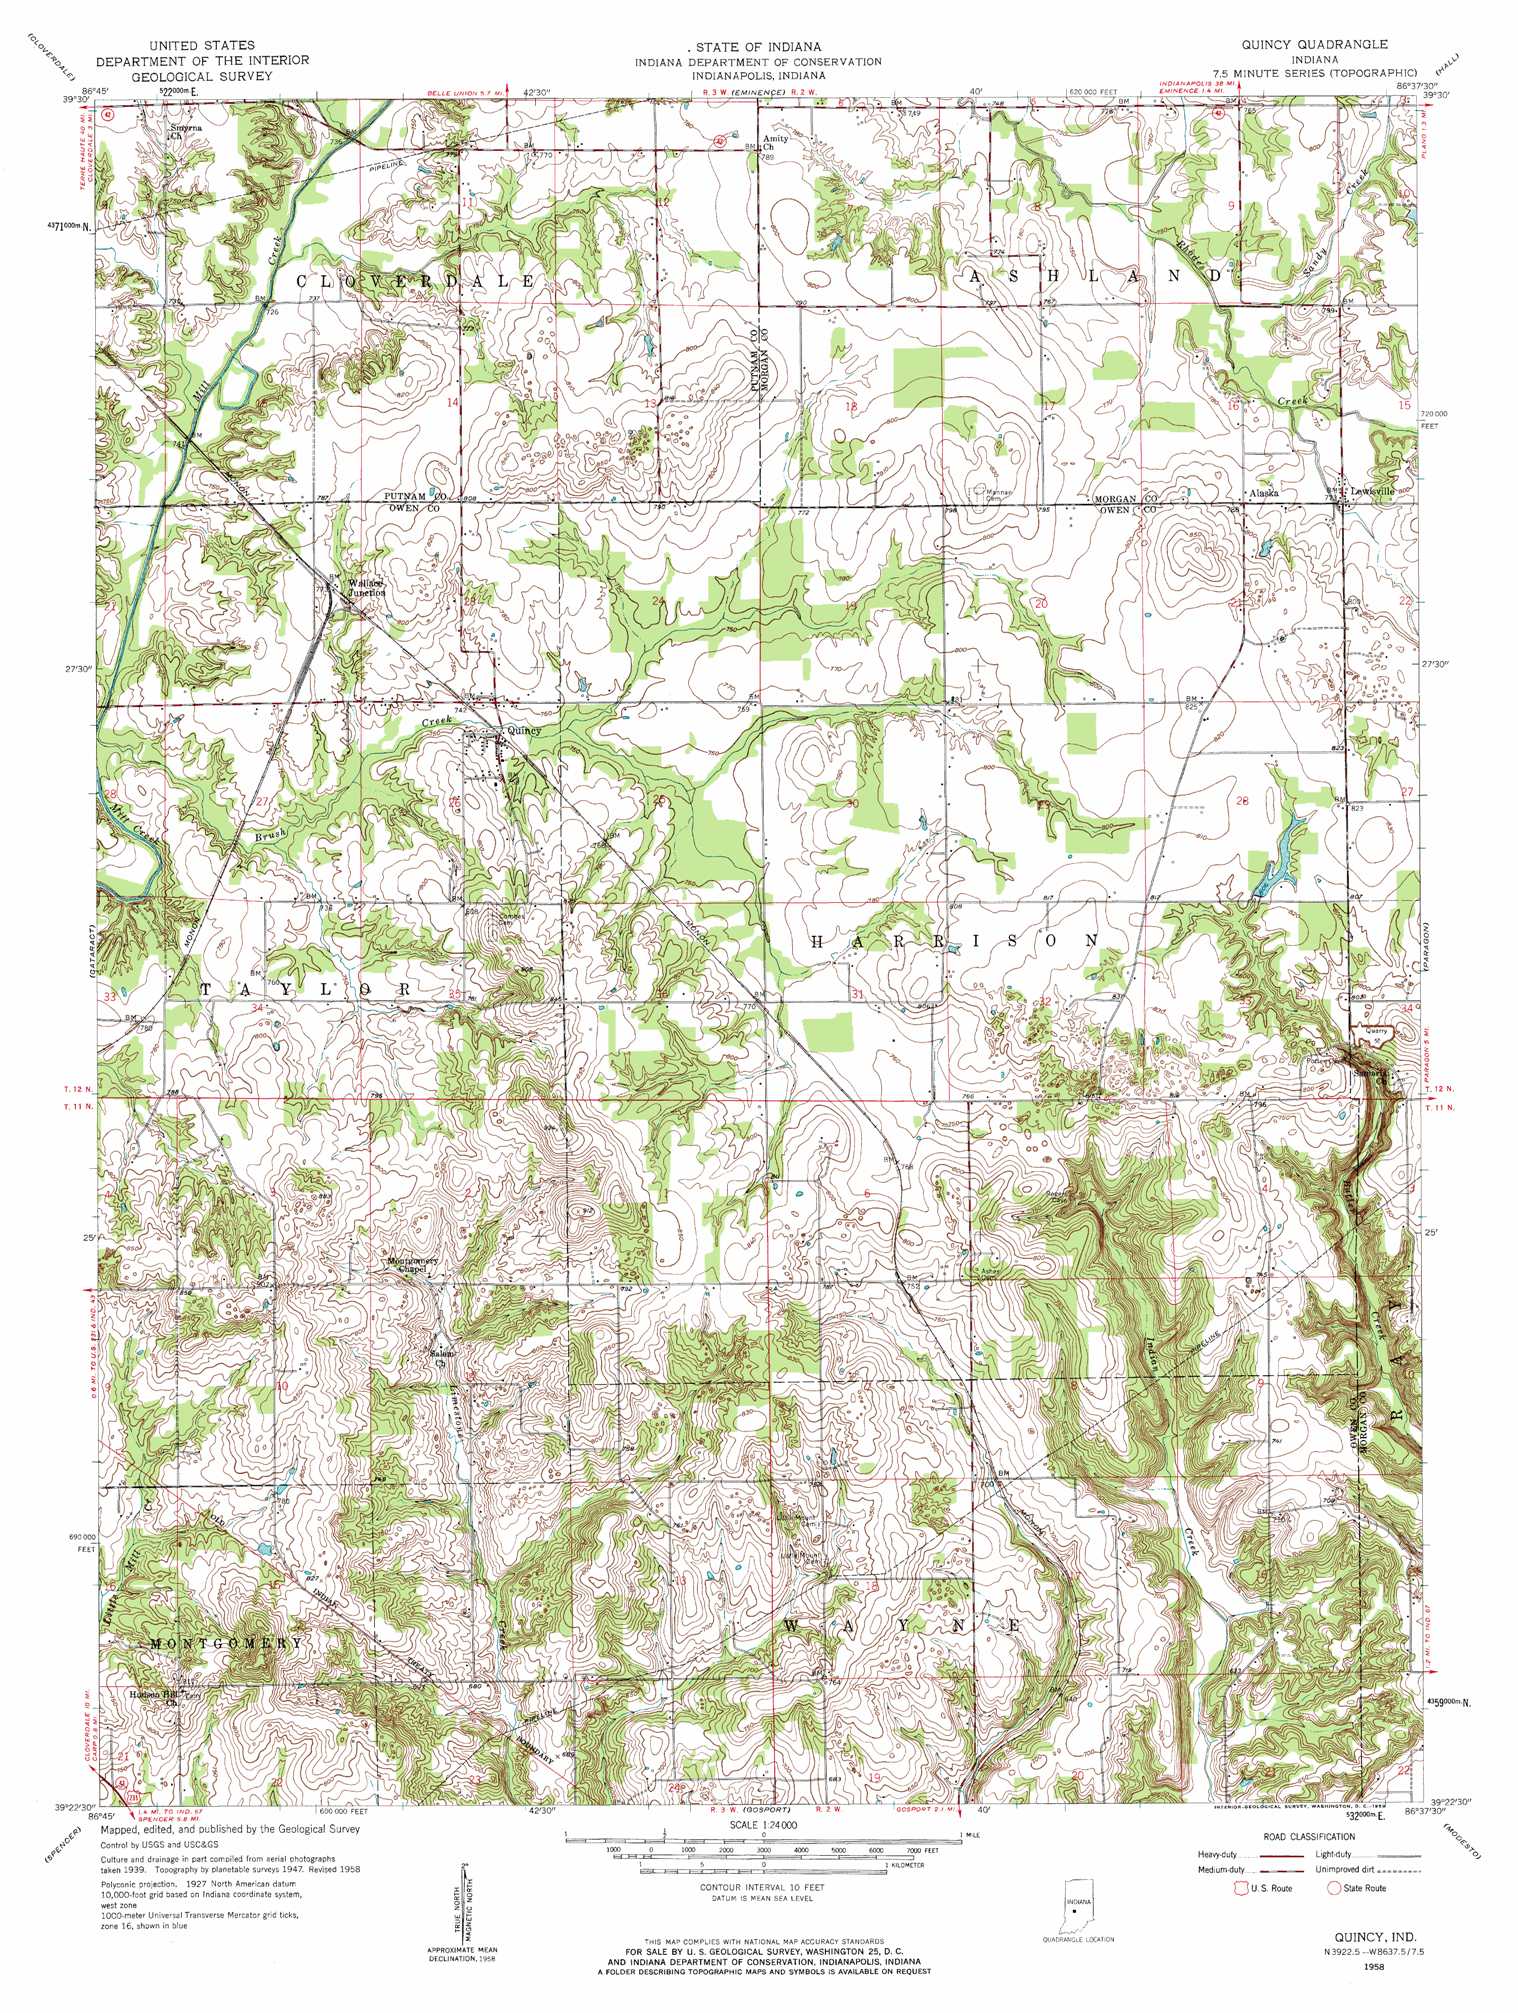 Quincy topographic map, IN - USGS Topo Quad 39086d6